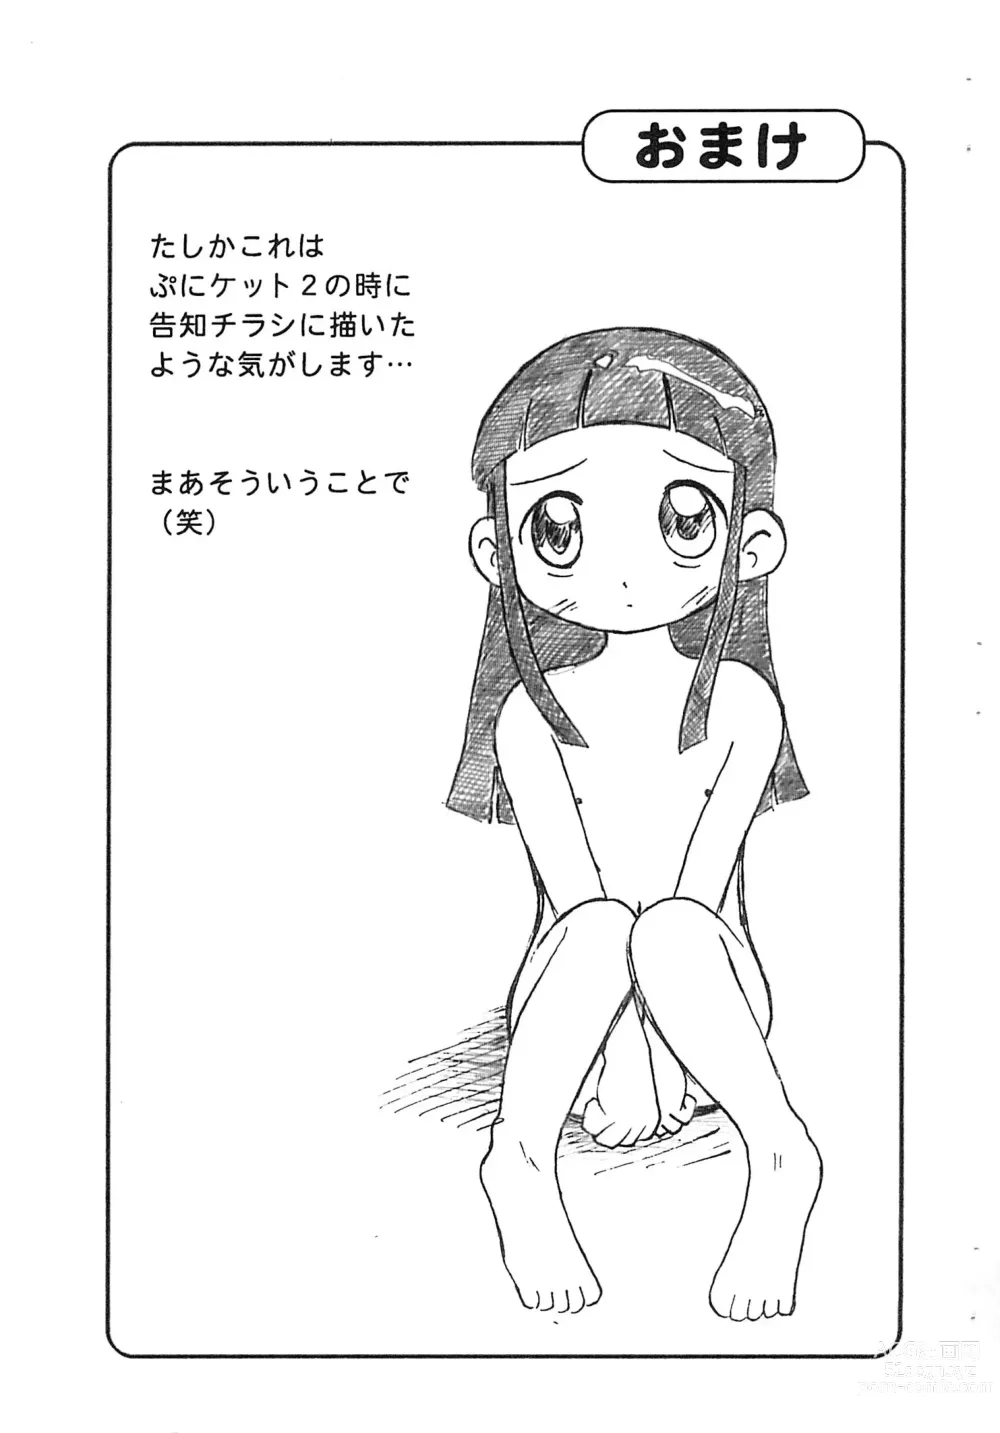 Page 7 of doujinshi Marina-chan no Rakugaki.